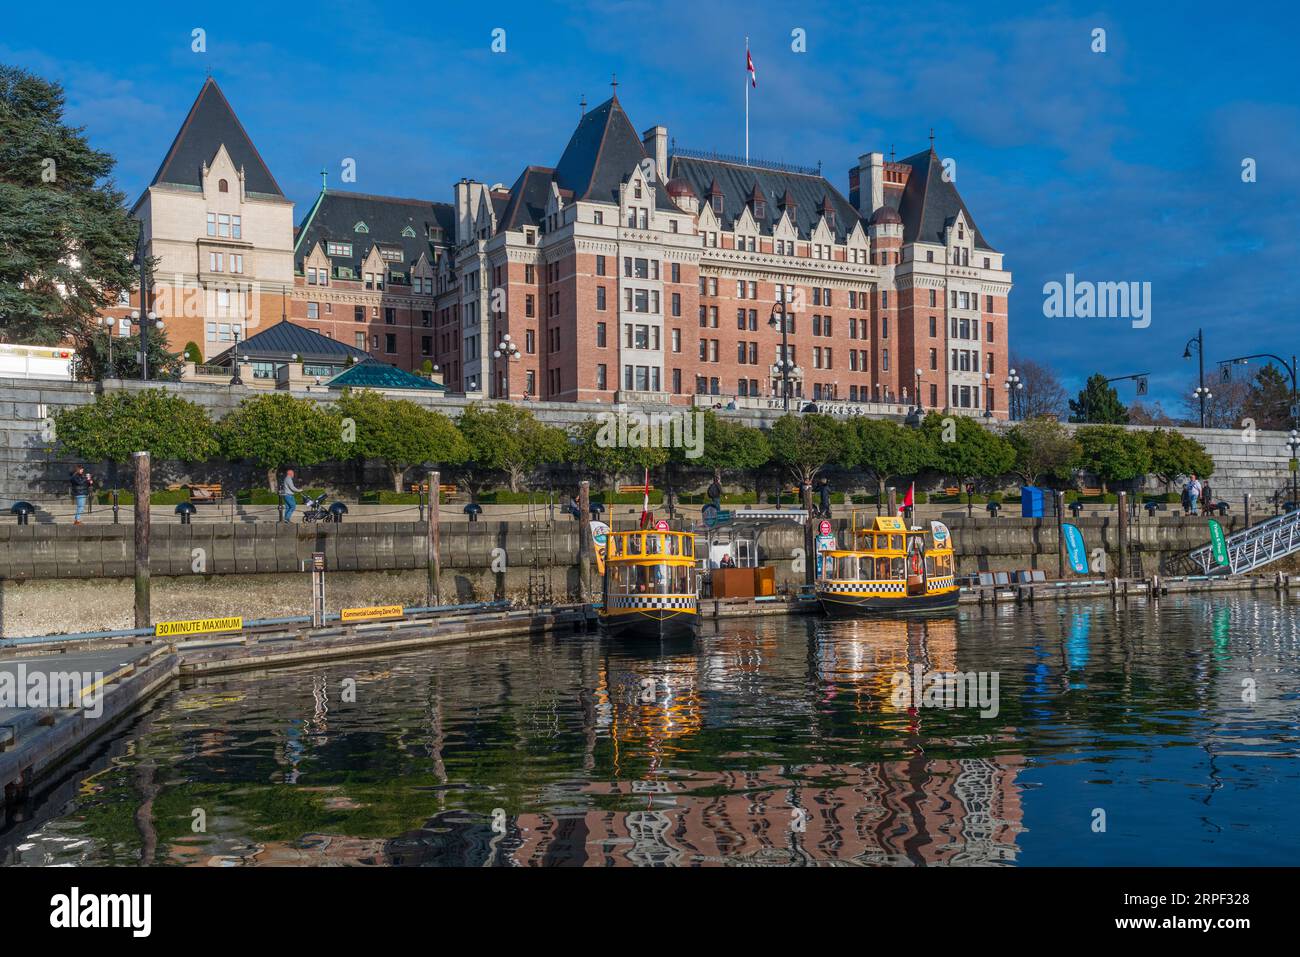 The Empress Hotel in Victoria, Vancouver Island, British Columbia, Canada. Stock Photo